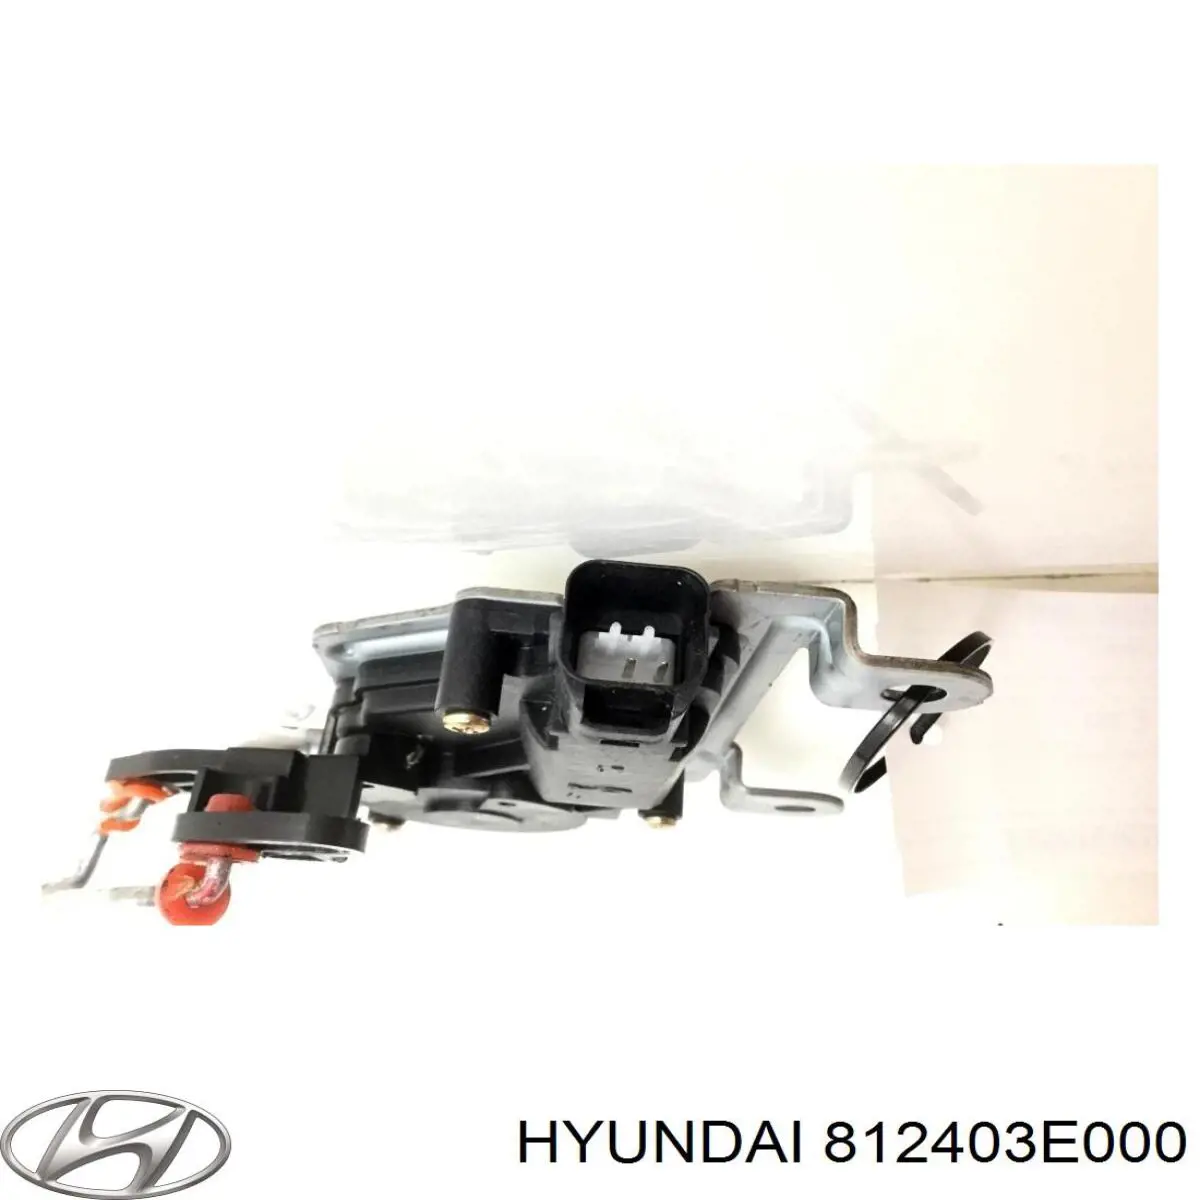 812403E000 Hyundai/Kia